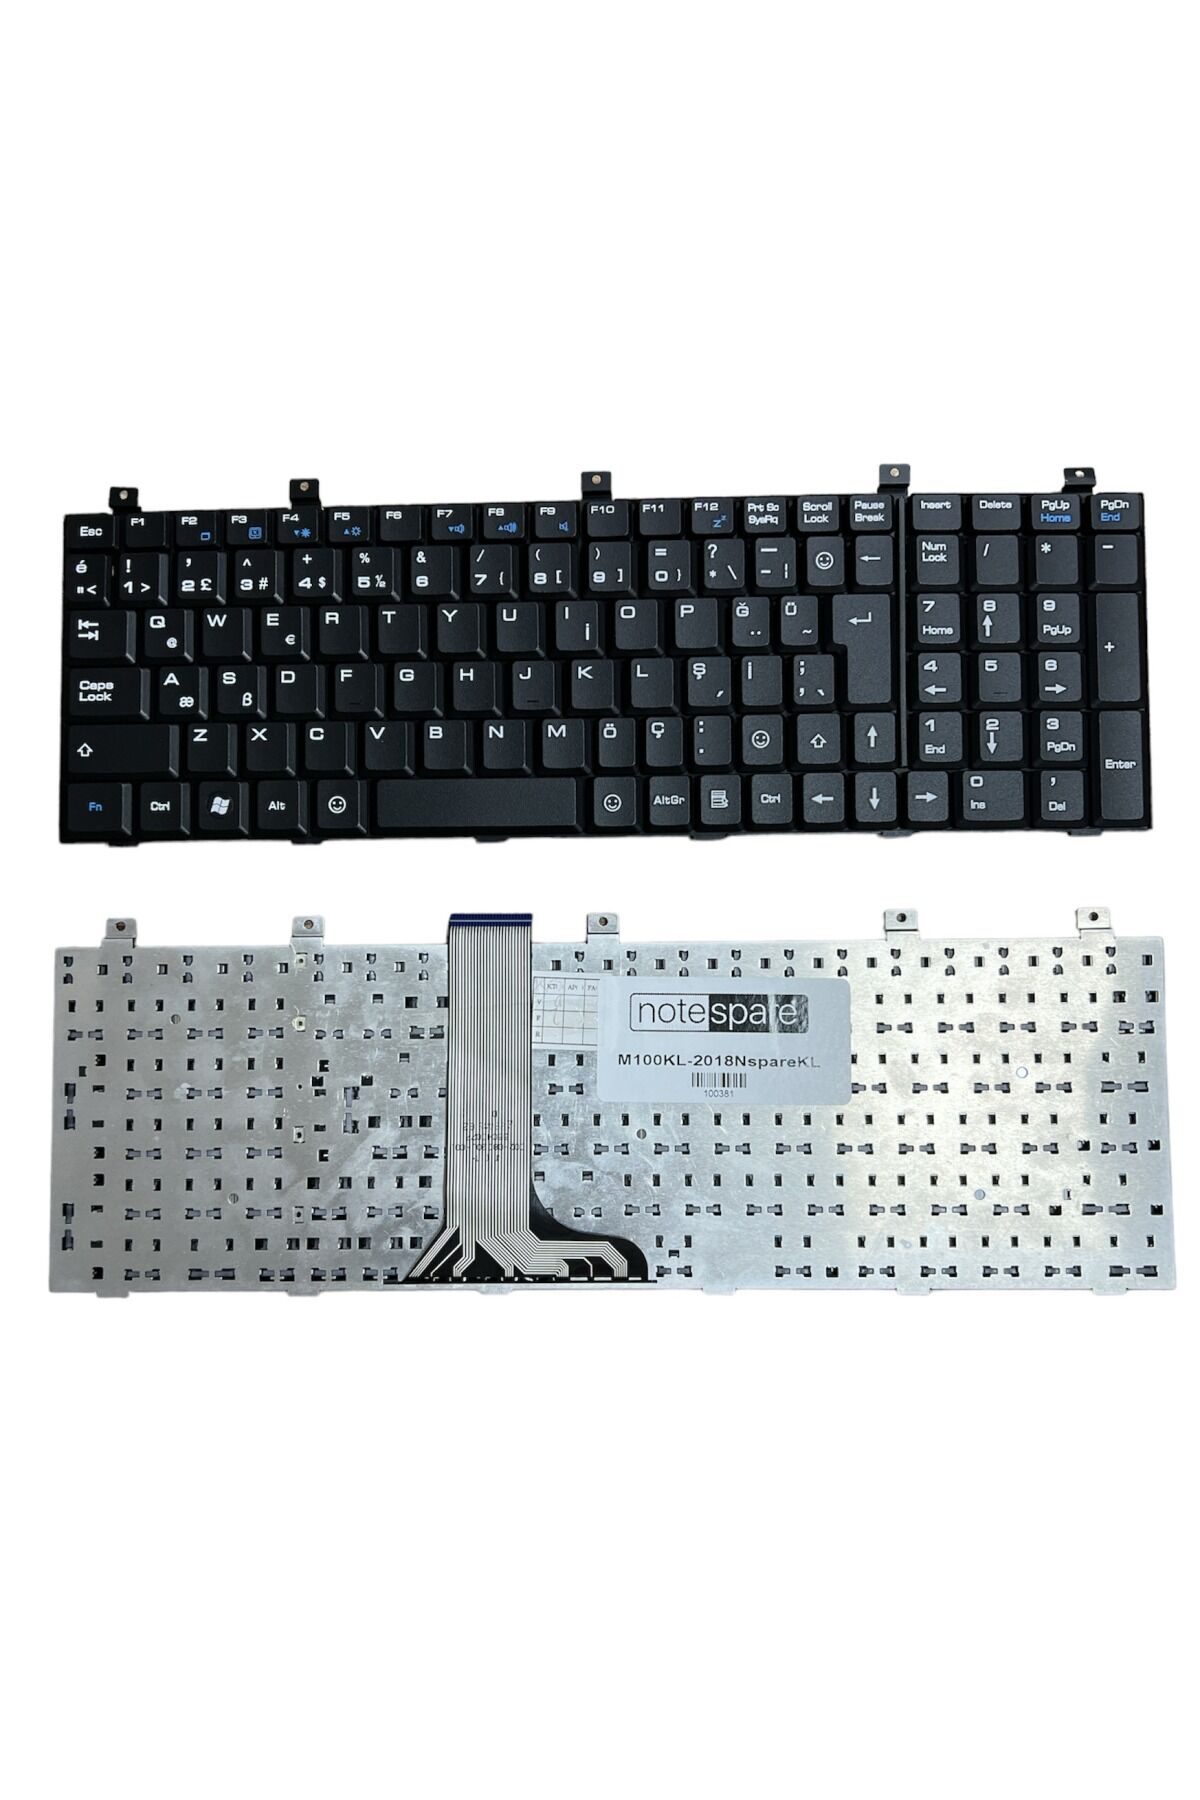 Msi ile Uyumlu CX500, CX600, CX605, CX700, E7405, ER710 Notebook Klavye Siyah TR